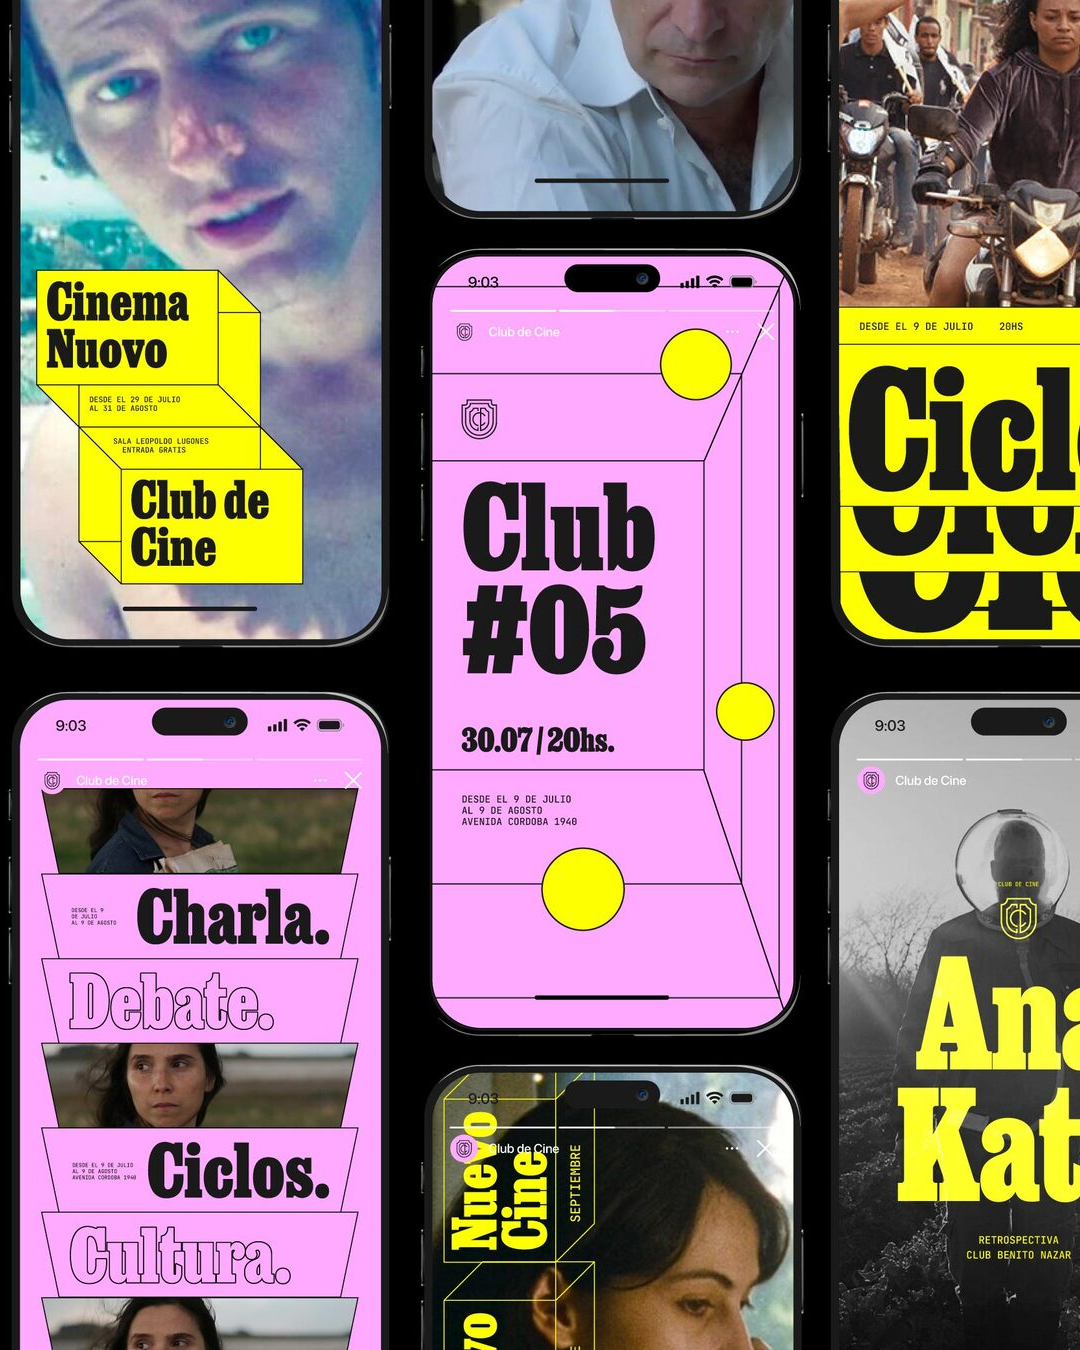 Club de Cine, using Job Clarendon